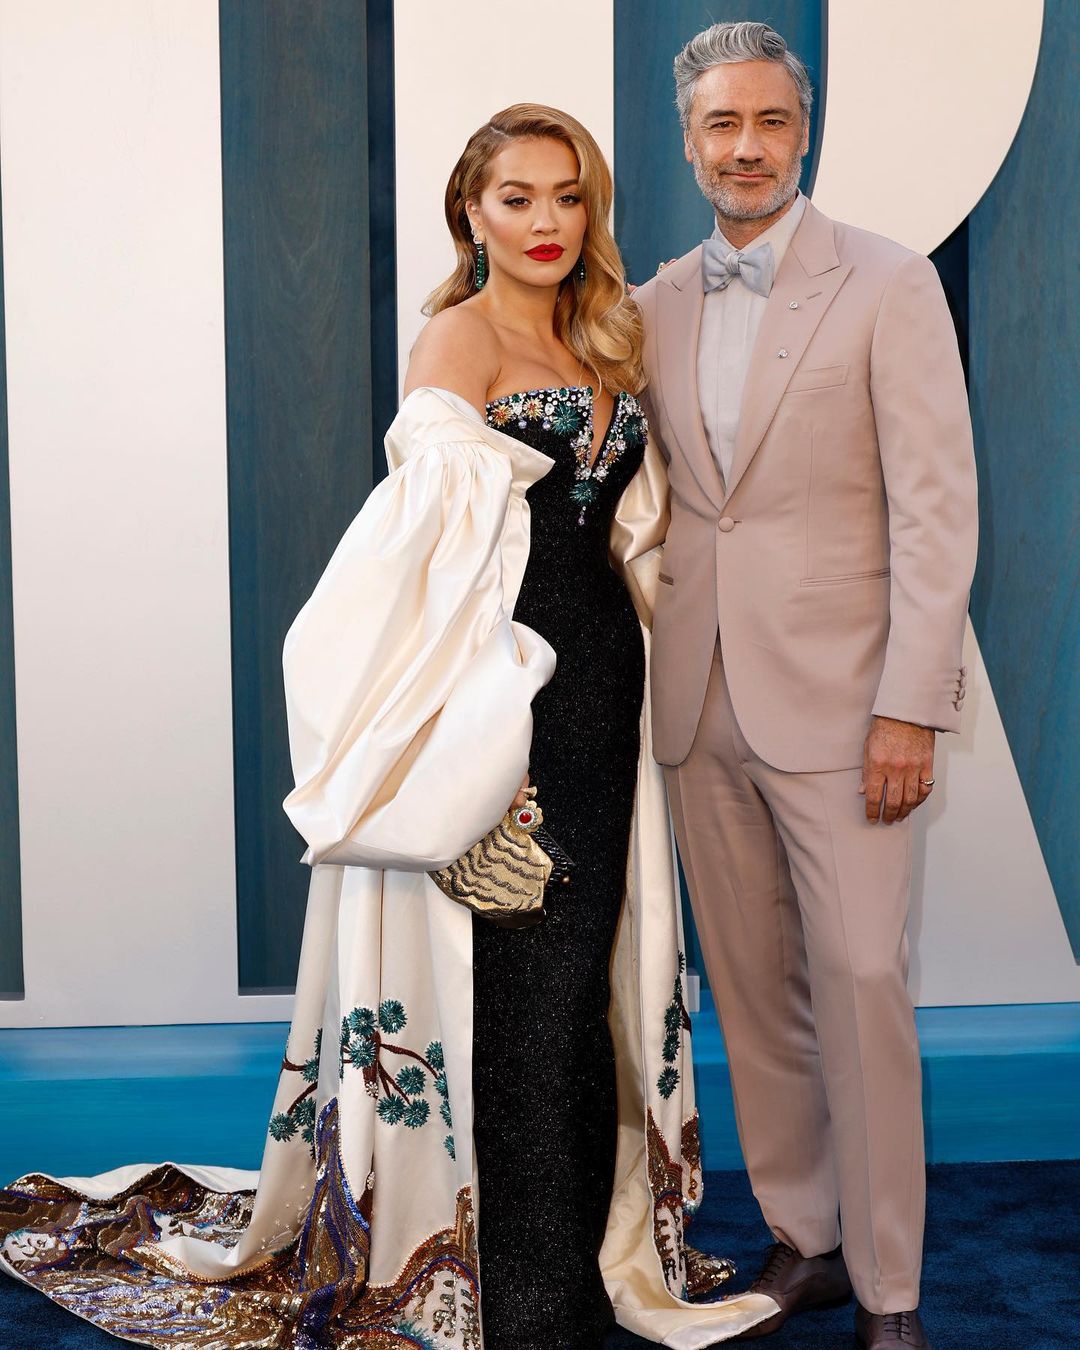 Rita Ora and Taika Waititi looked their glamorous selves on the red carpet